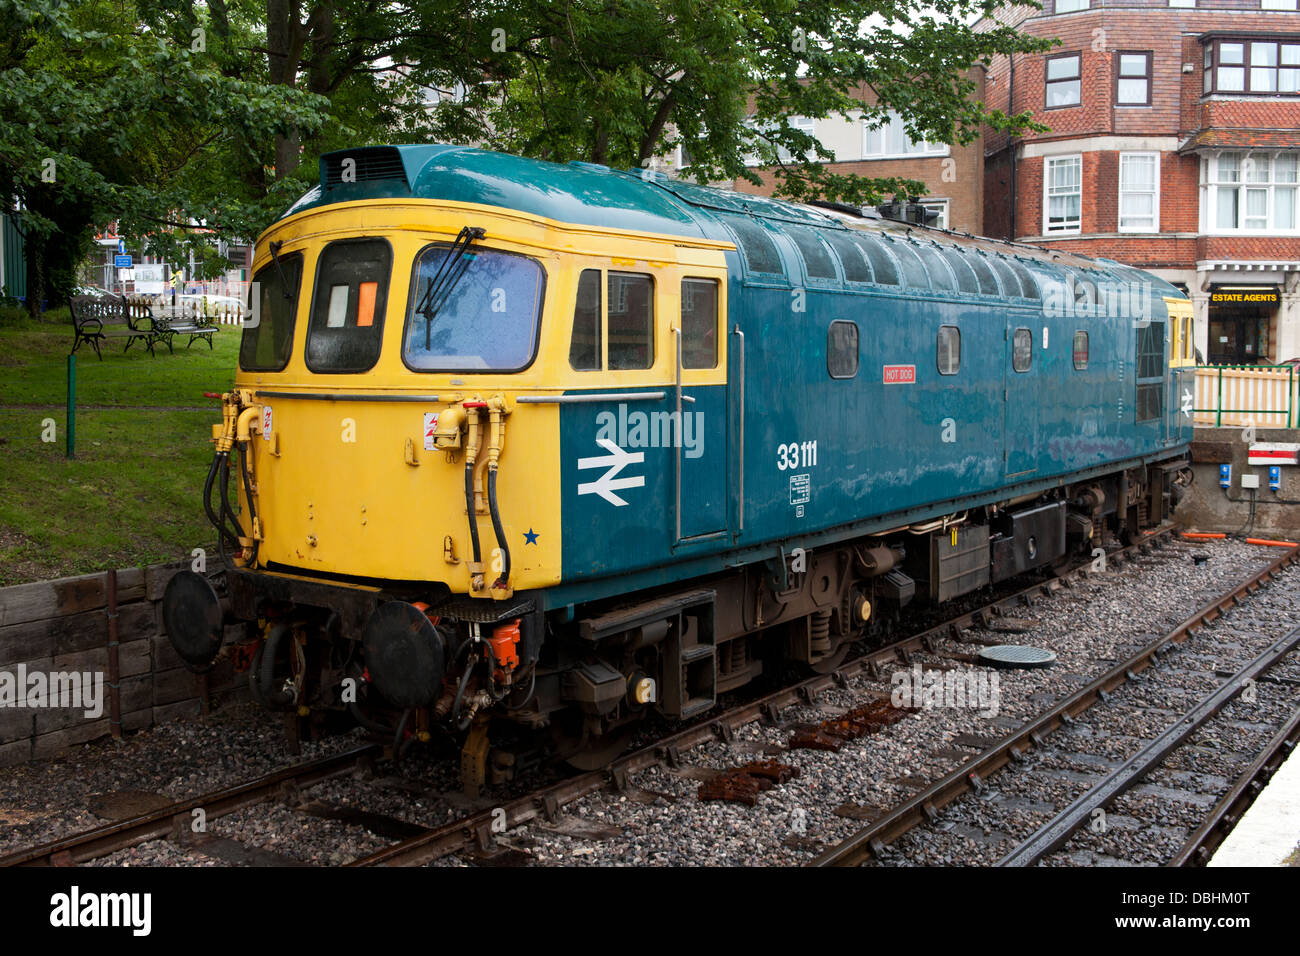 British Rail Class 33 number 33111 'Hot Dog' at Swanage railway station Stock Photo